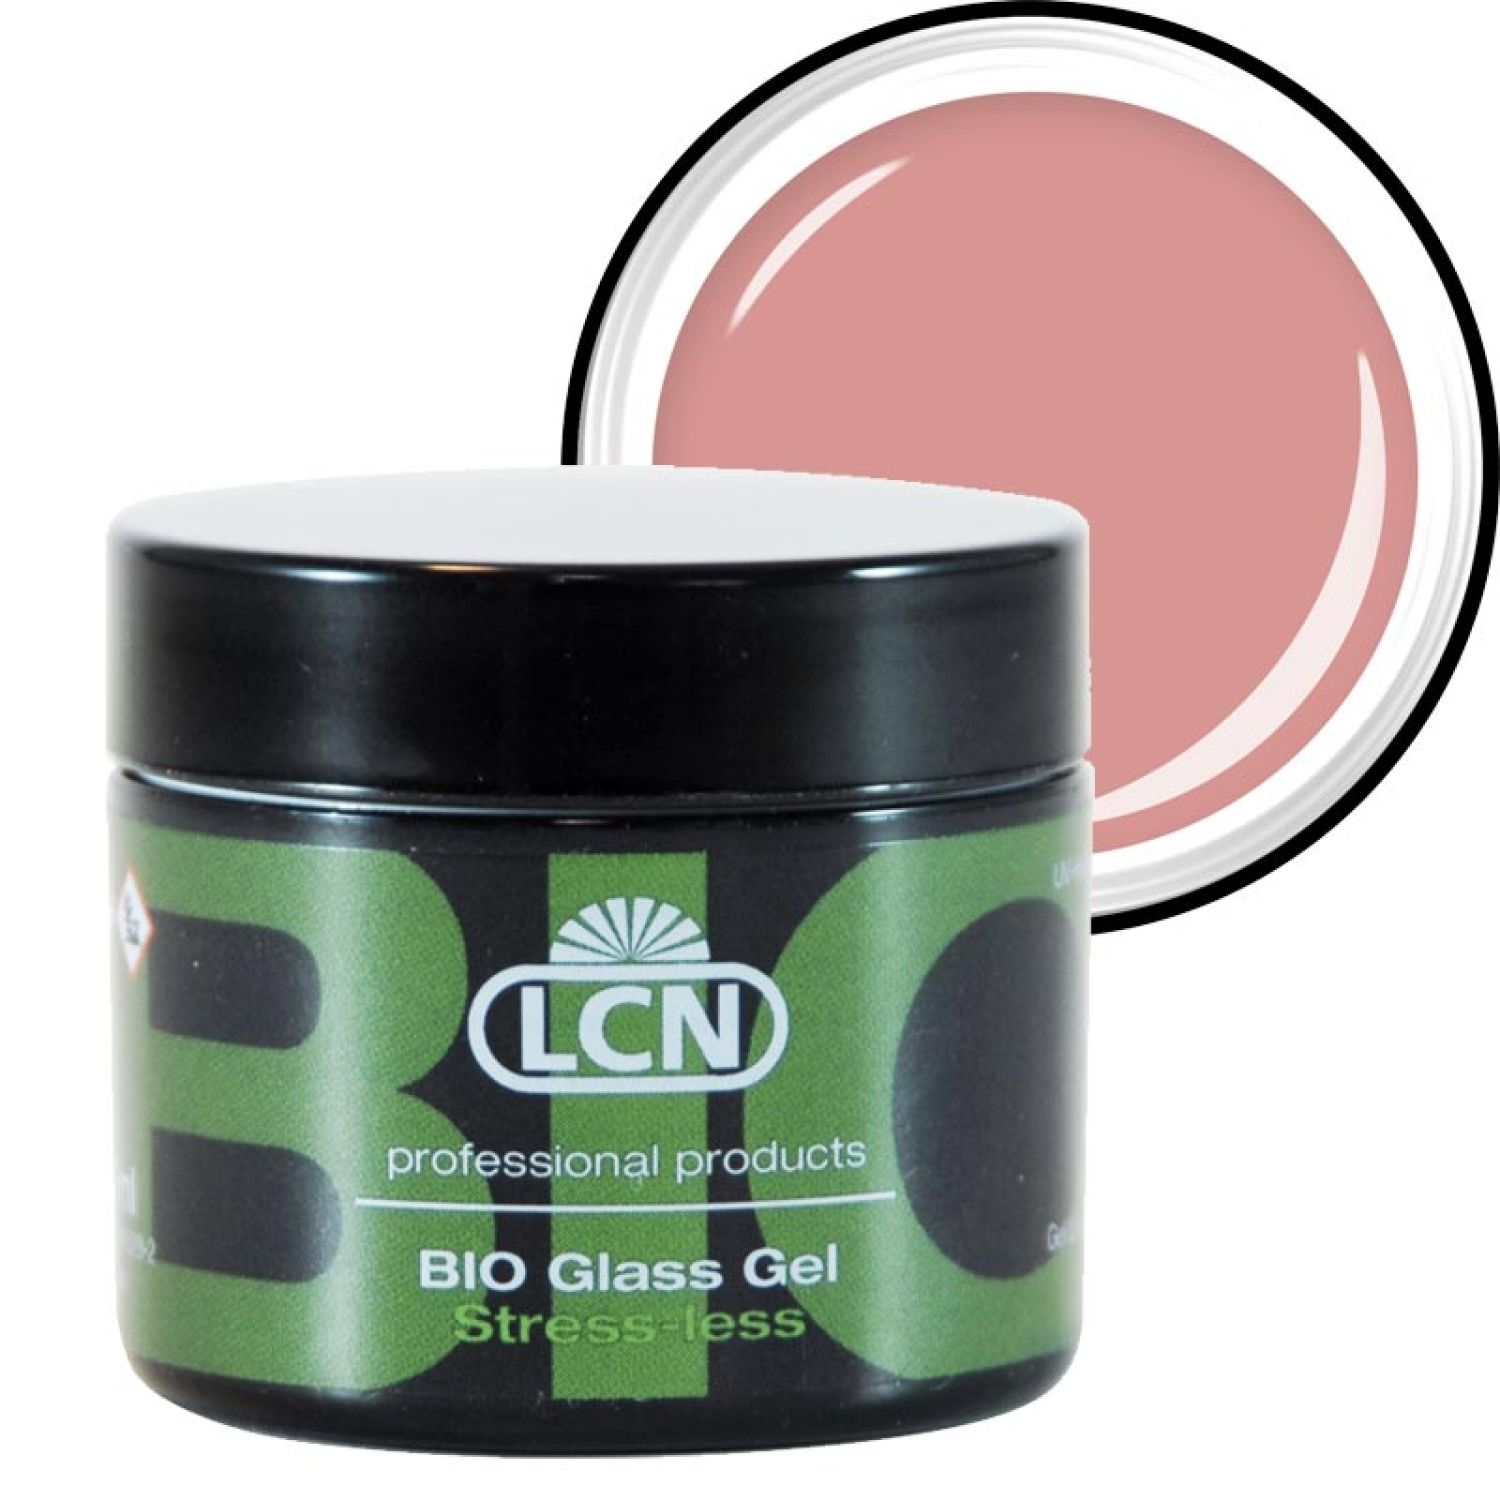 LCN Bio Glass Gel stress-less - nude